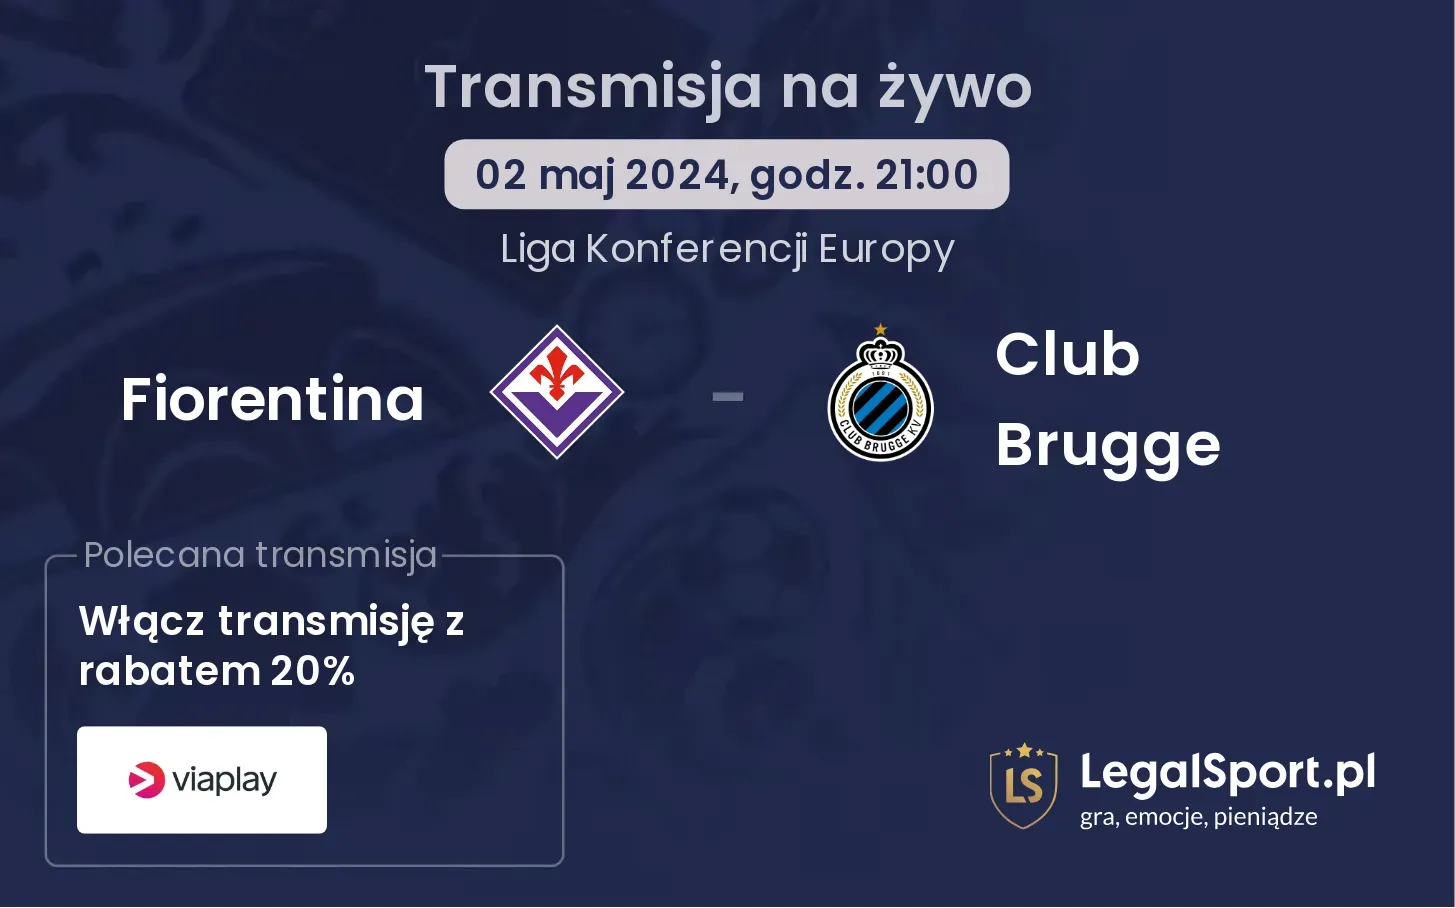 Fiorentina - Club Brugge transmisja na żywo